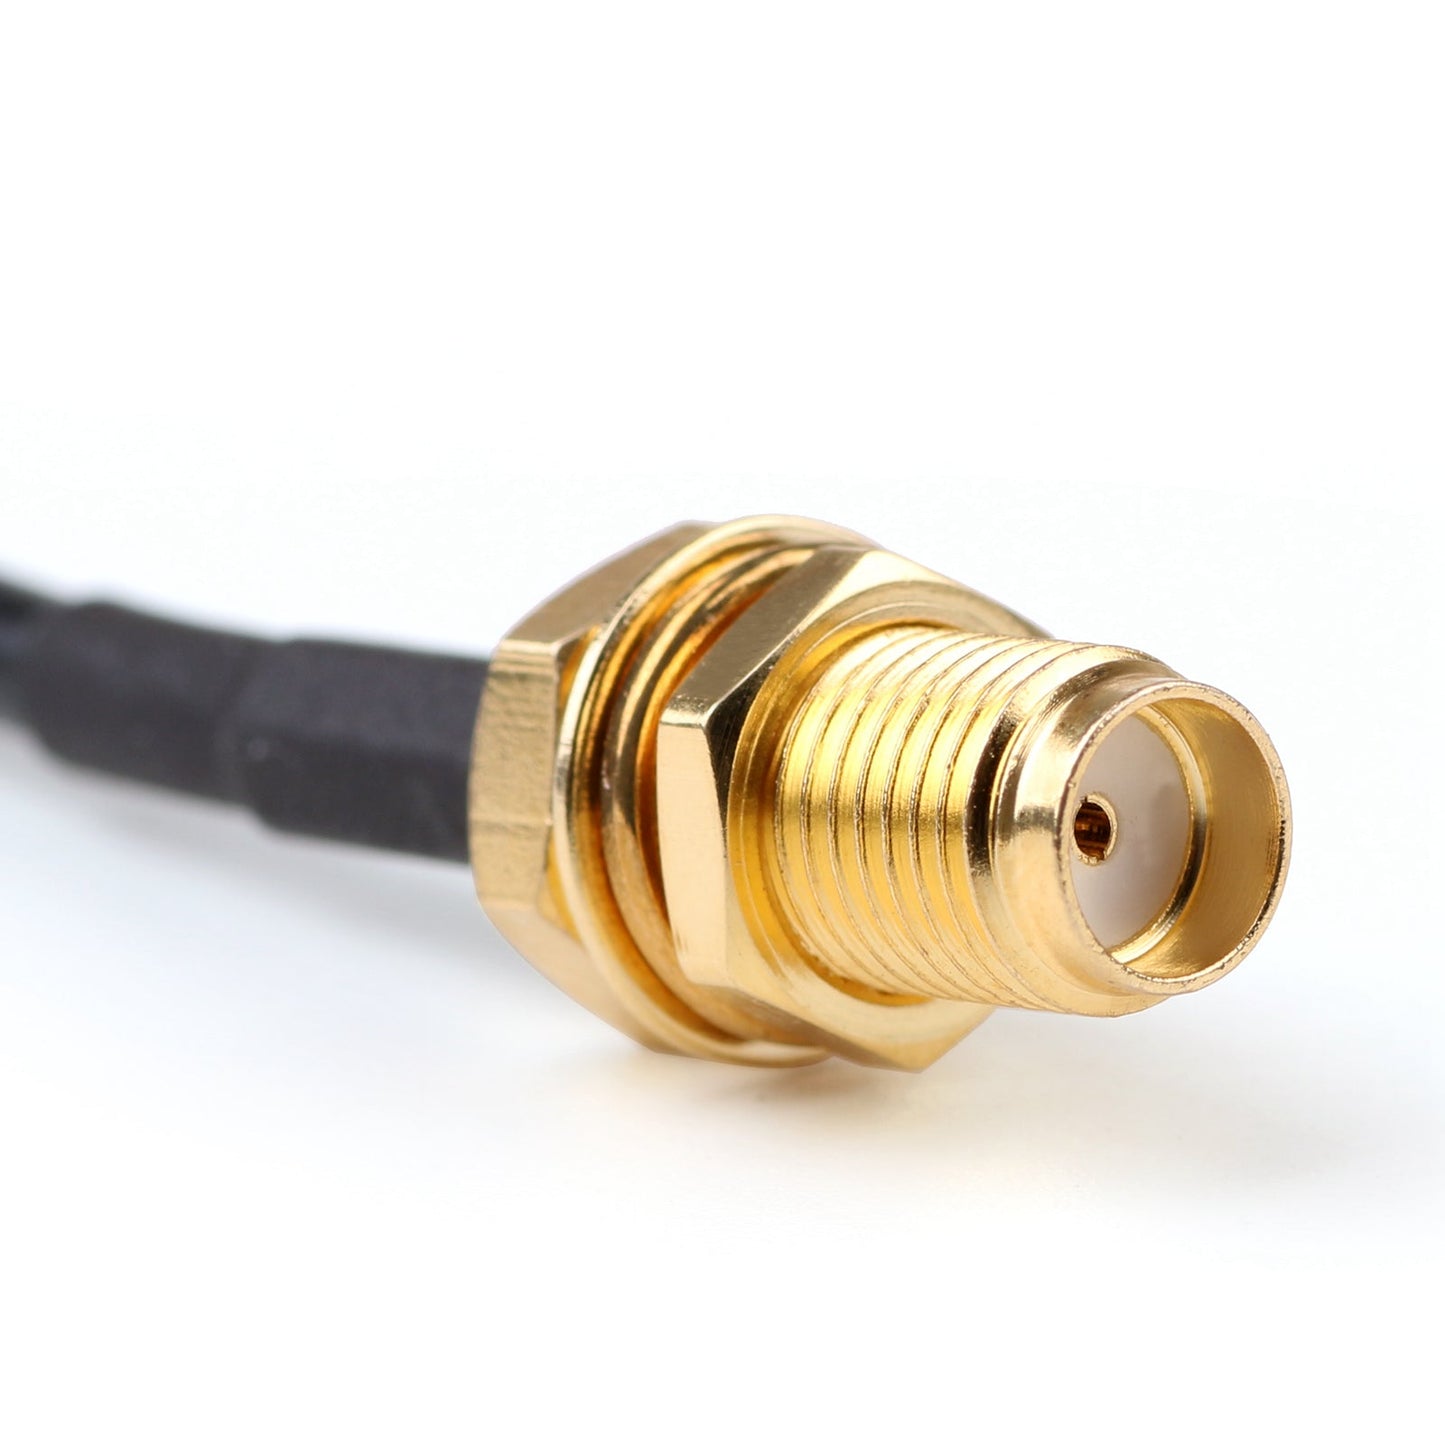 3m RG174 Cable SMA Male Plug To SMA Female Jack Bulkhead Coax Pigtail 10ft